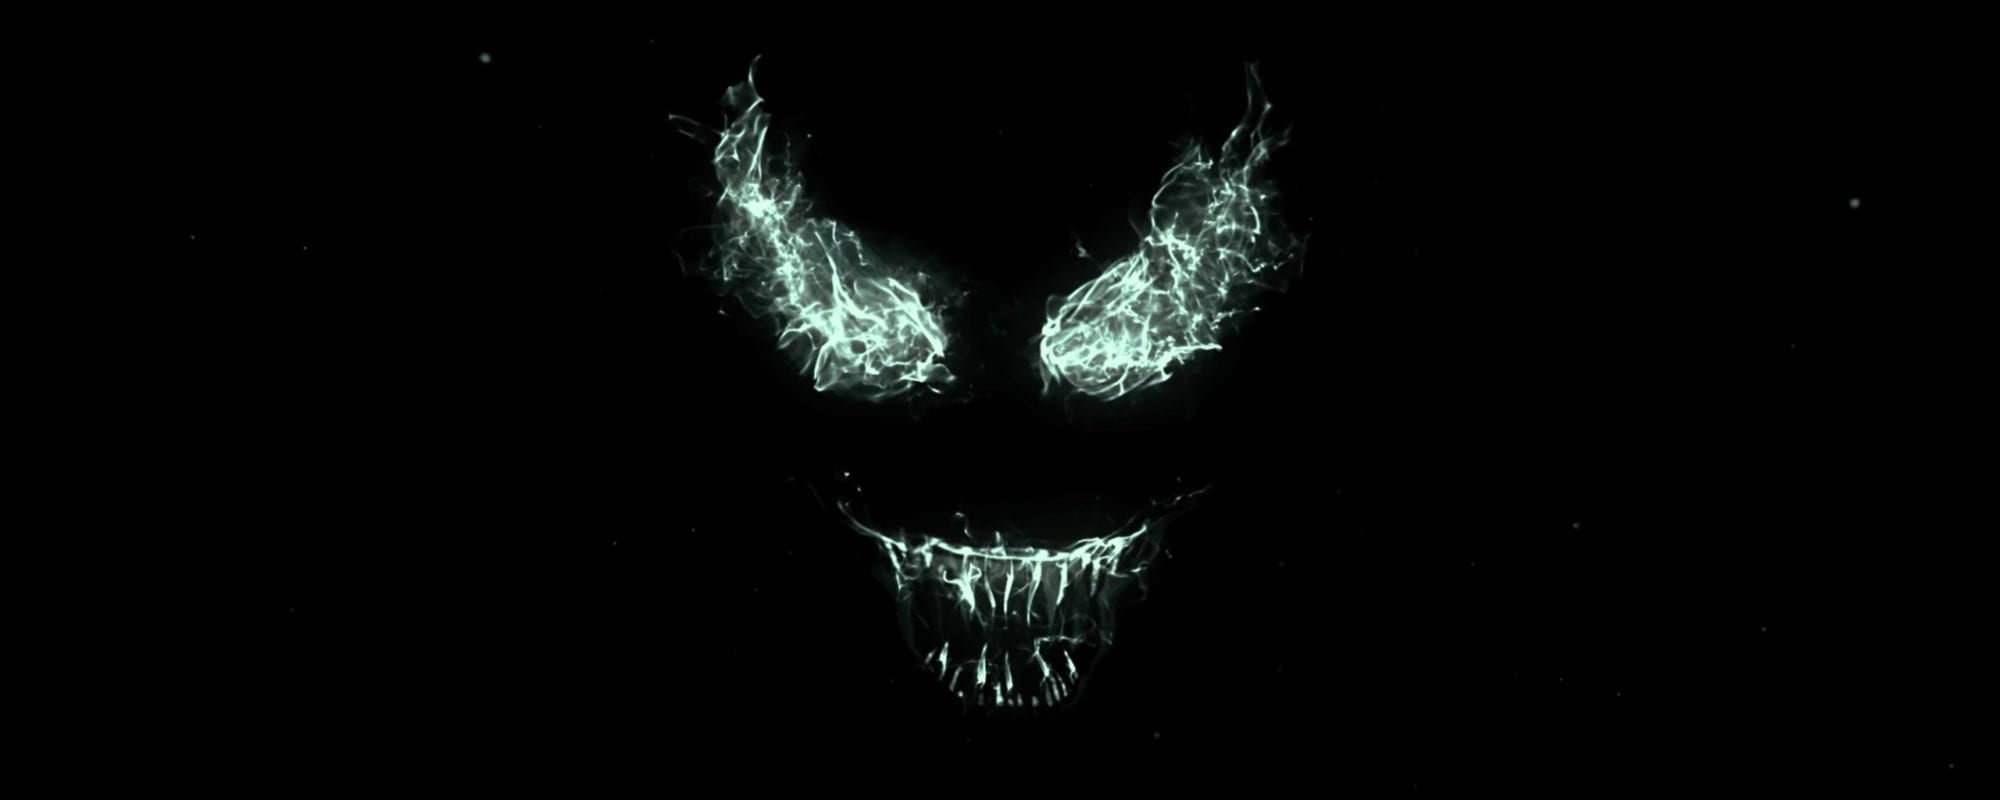 Venom Teaser Trailer - Tangled Up In Fear